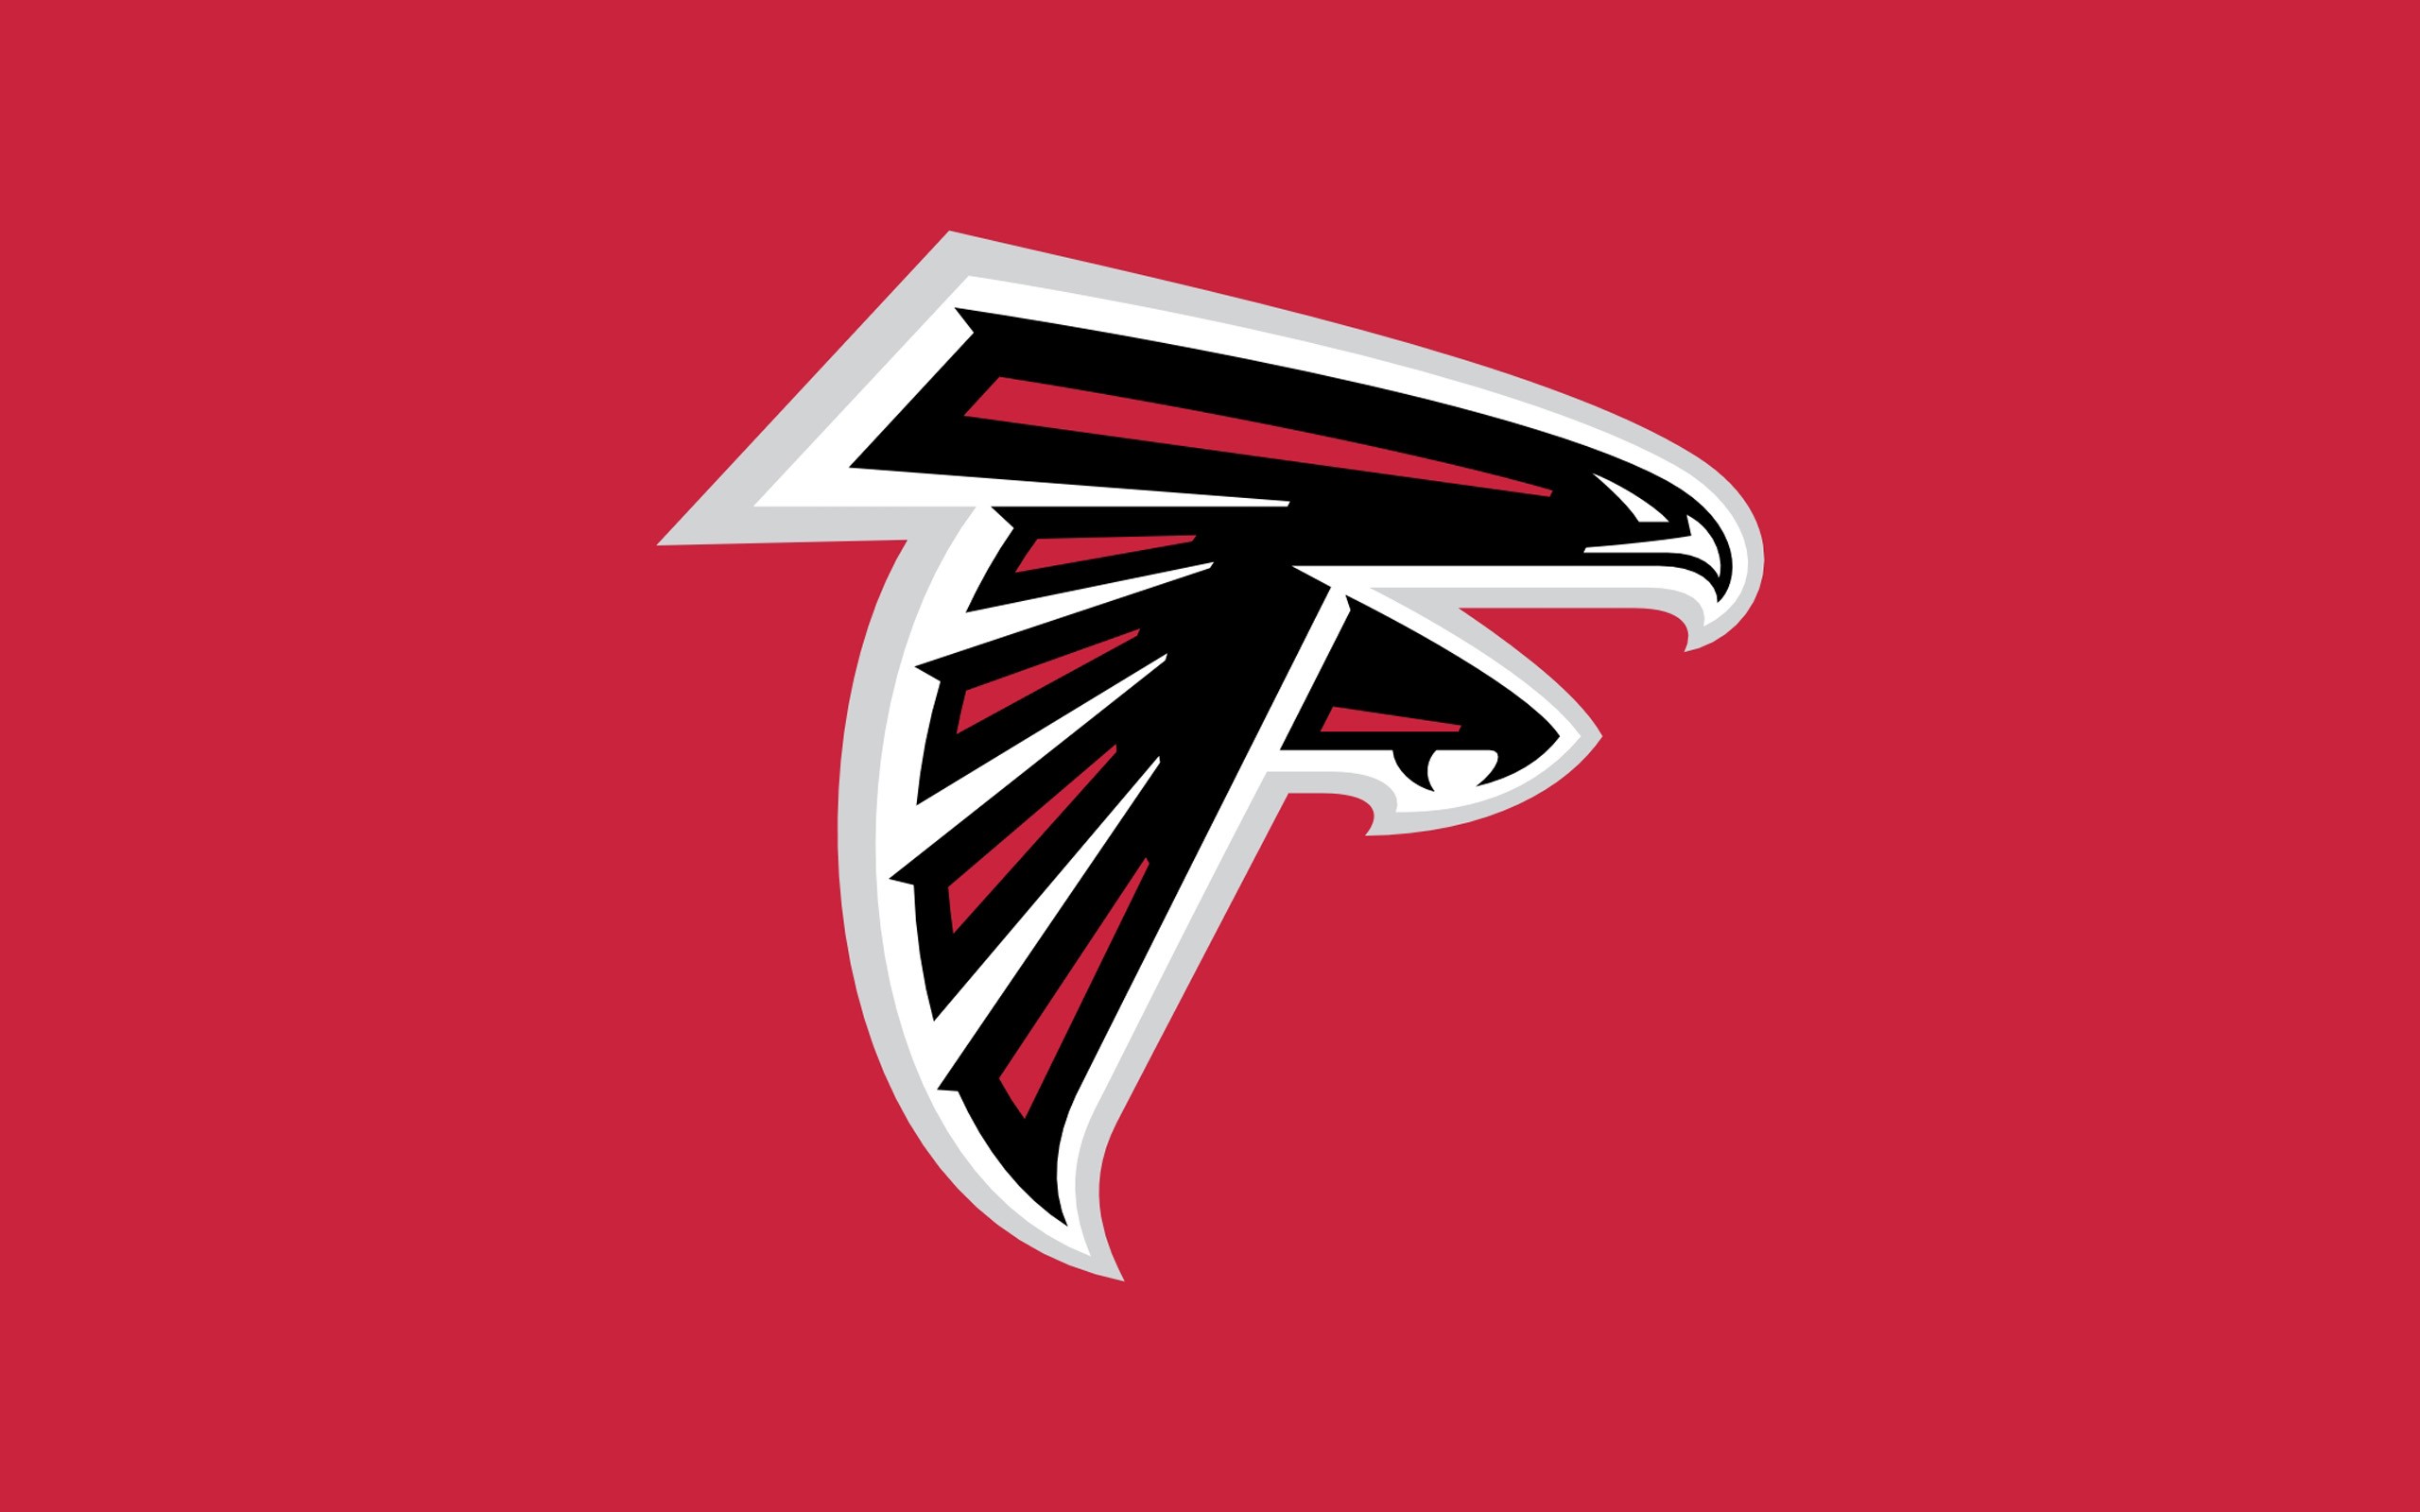 Free falcon logo.